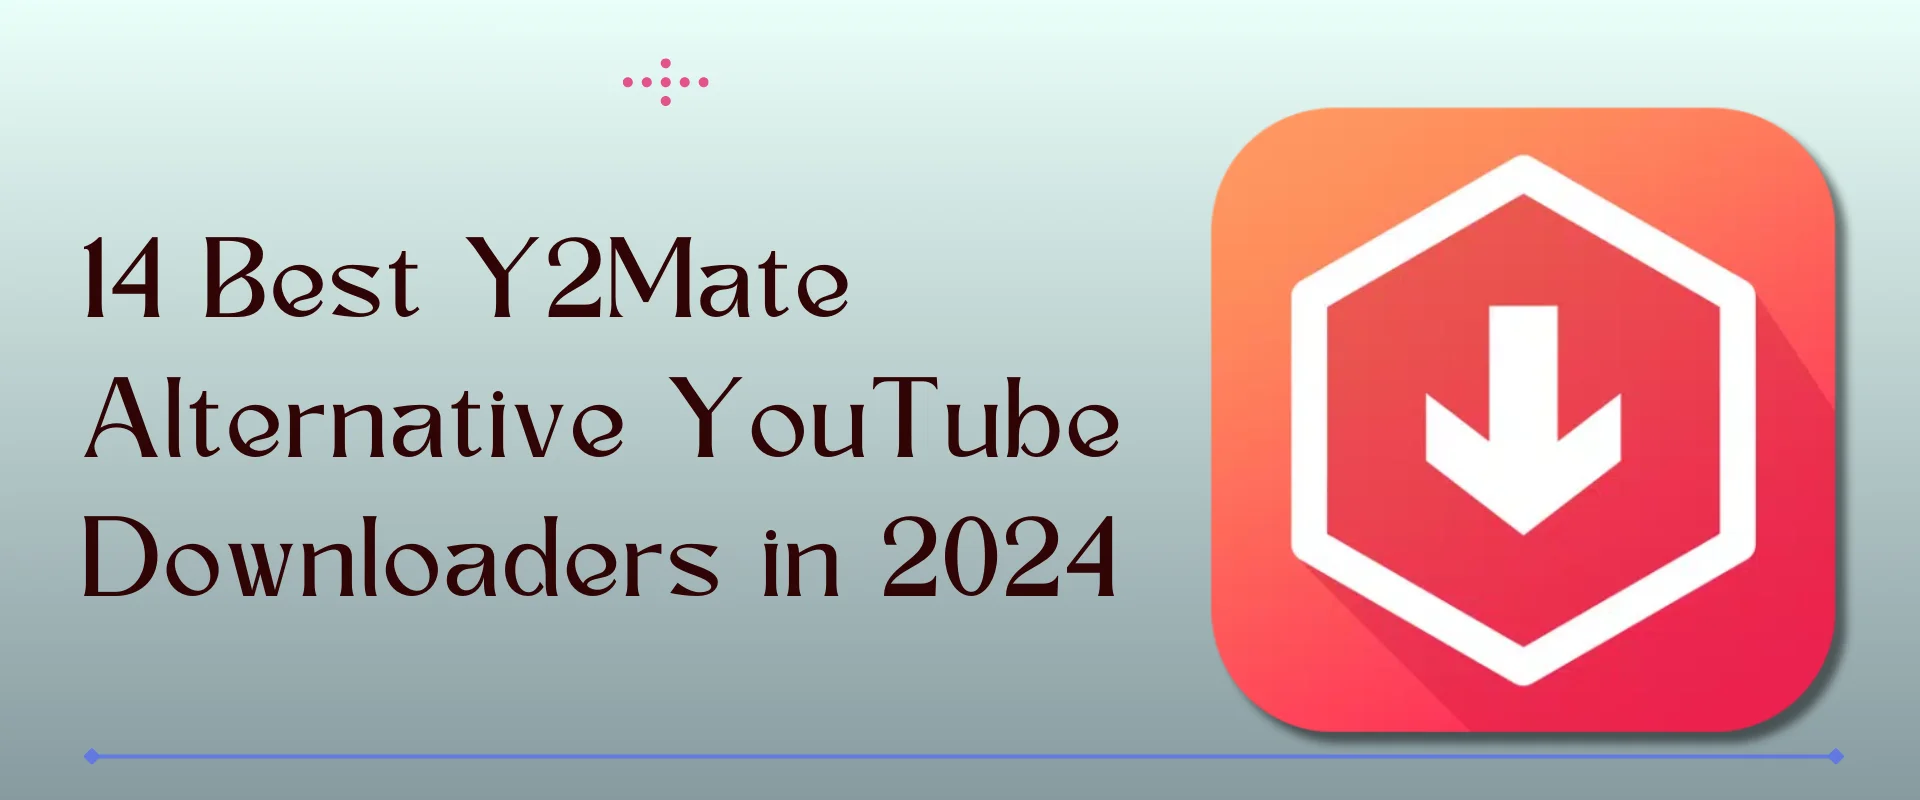 14 Best Y2Mate Alternative YouTube Downloaders in 2024